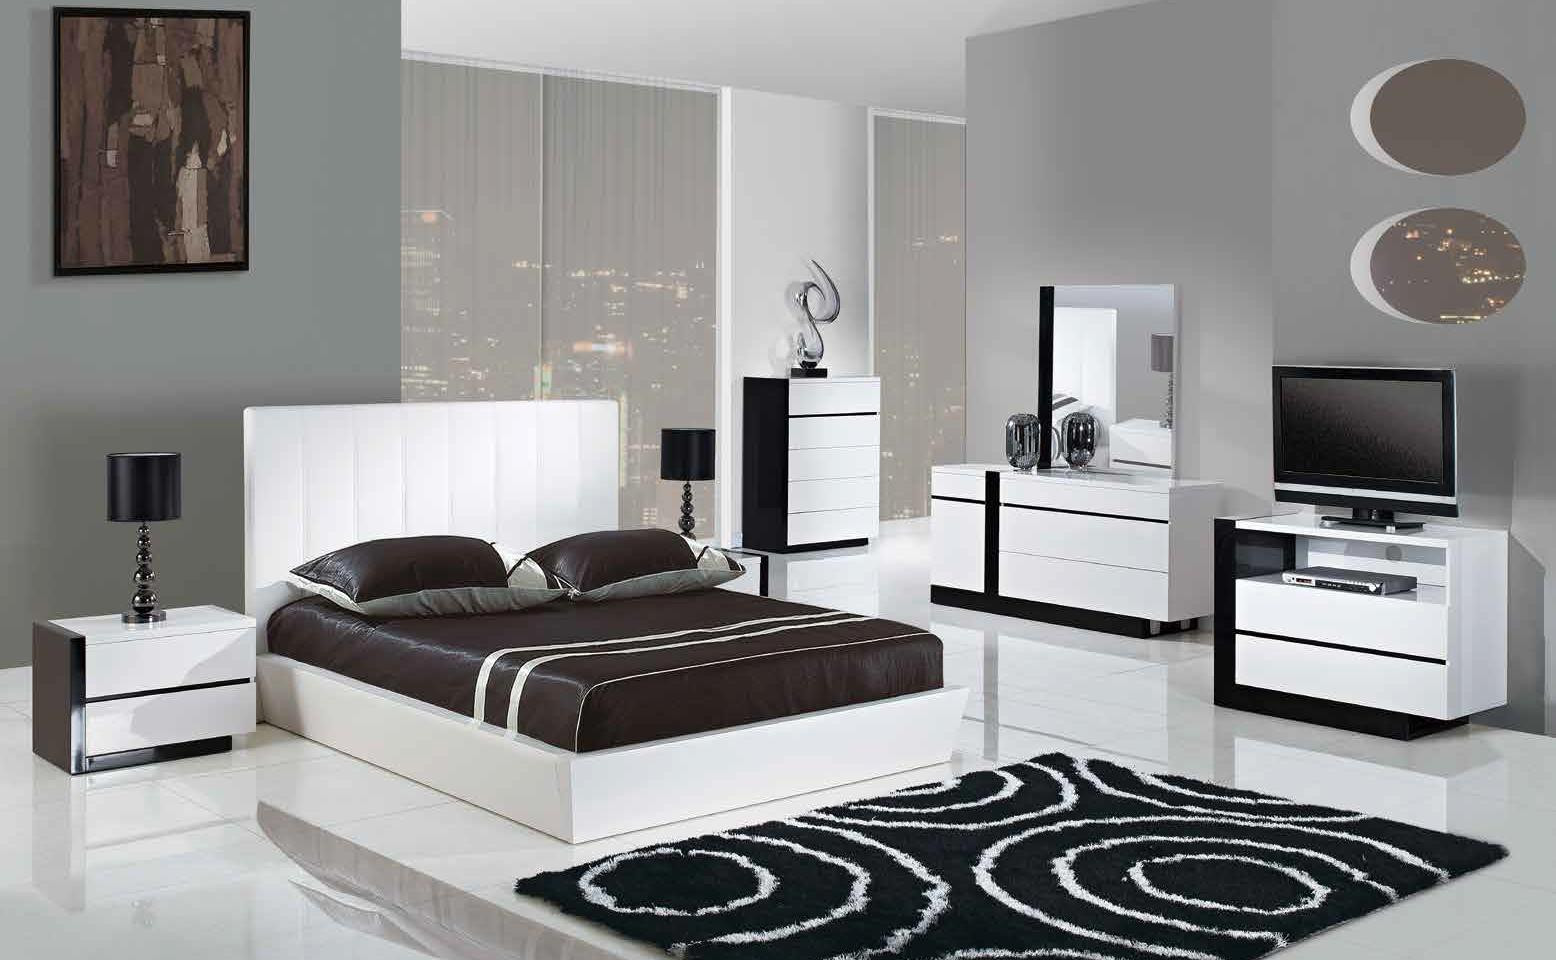 Modern King Size Bedroom Sets
 TRINITY 5pcs KING SIZE MODERN PLATFORM BEDROOM SET WHITE